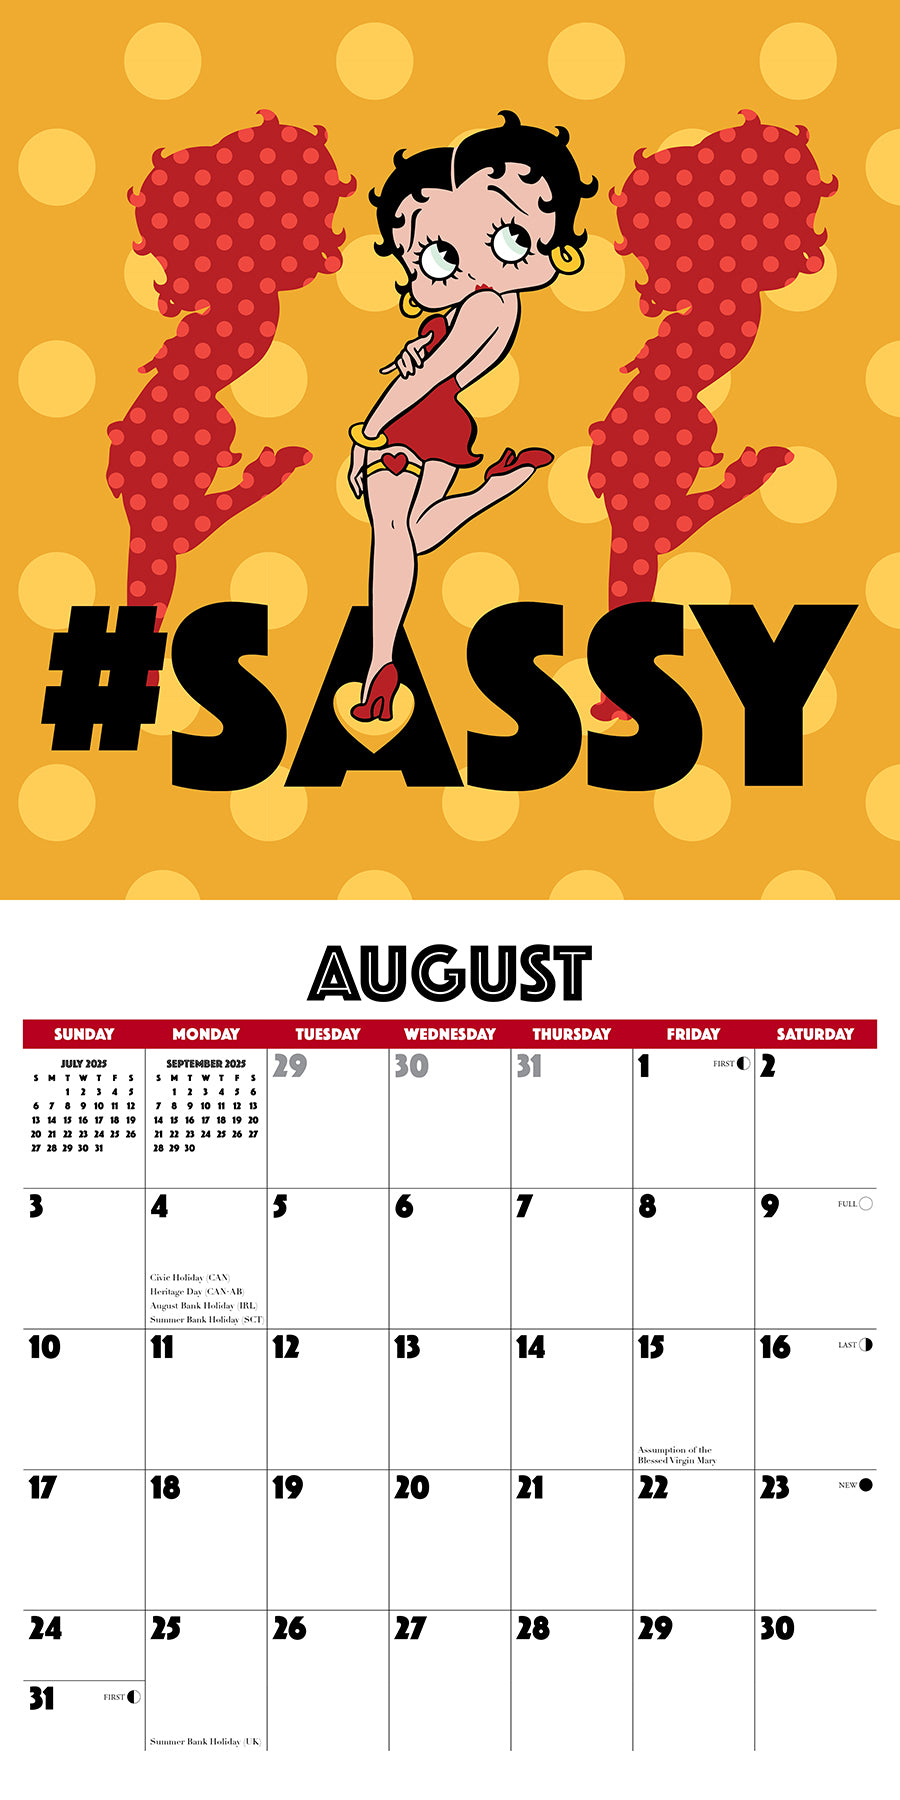 2025 Betty Boop (w/foil) - Square Wall Calendar